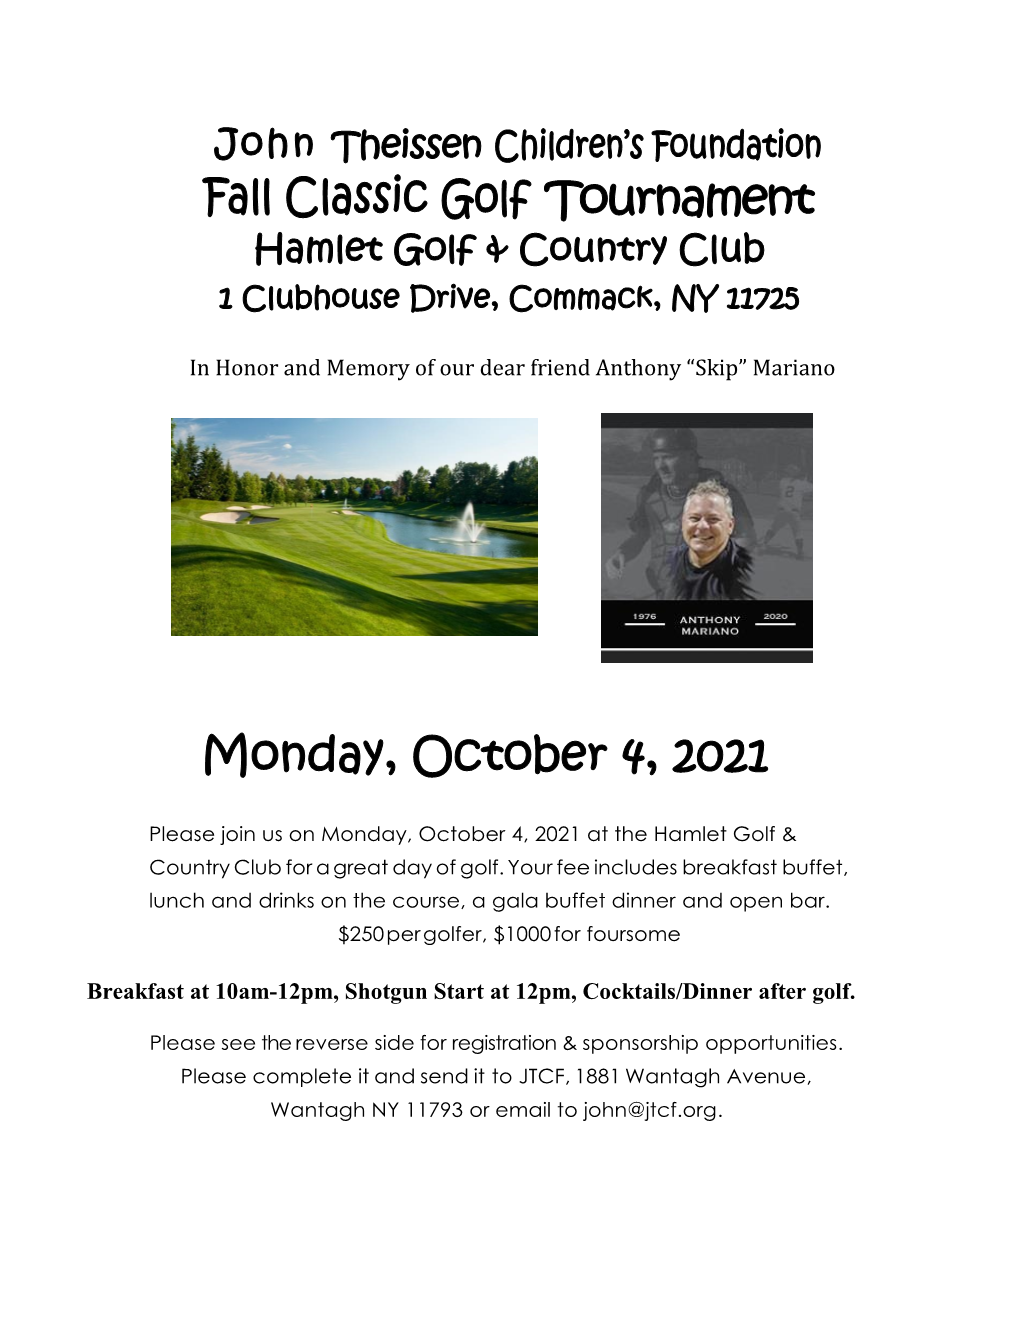 Fall Classic Golf Tournament Monday, October 4, 2021